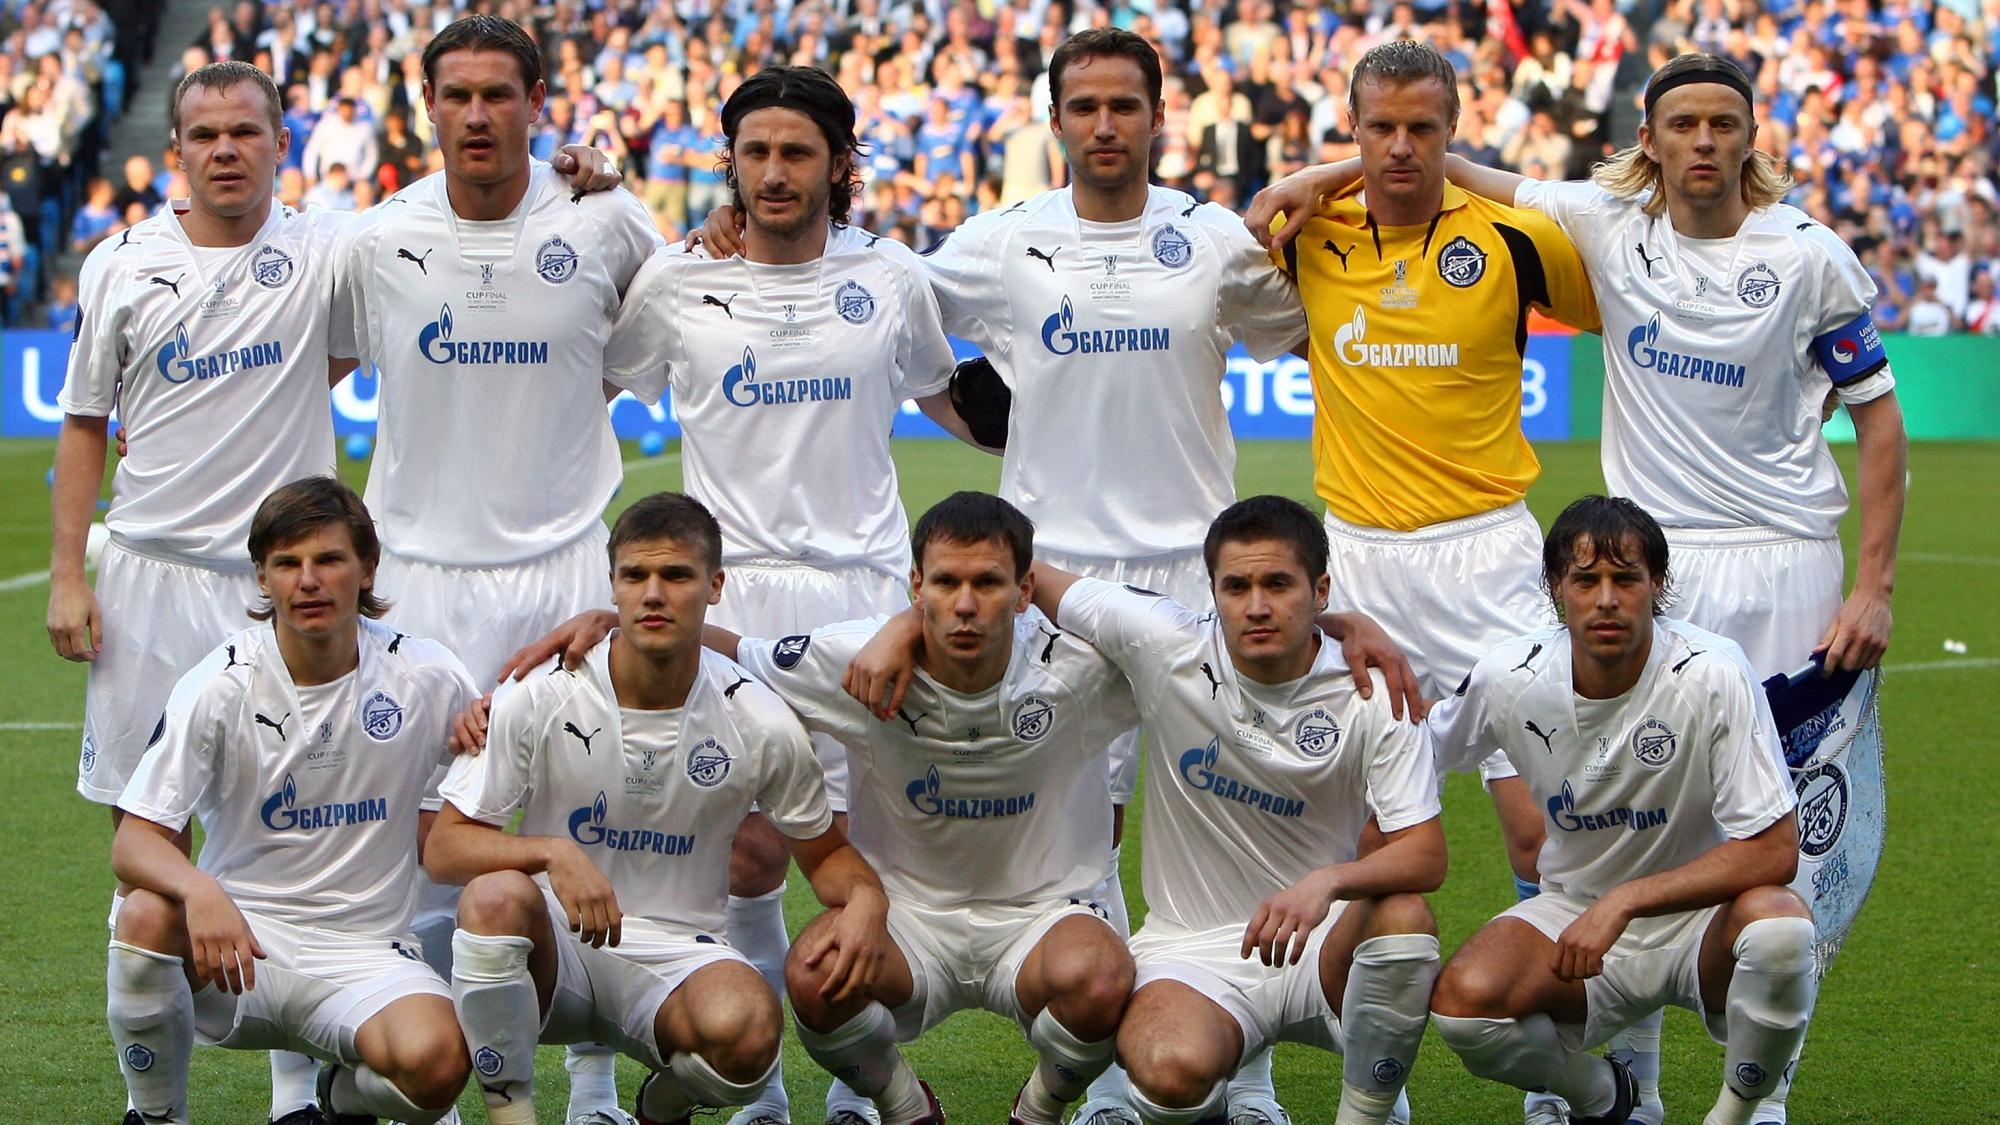 Боруссия дортмунд 2007- 2008 состав